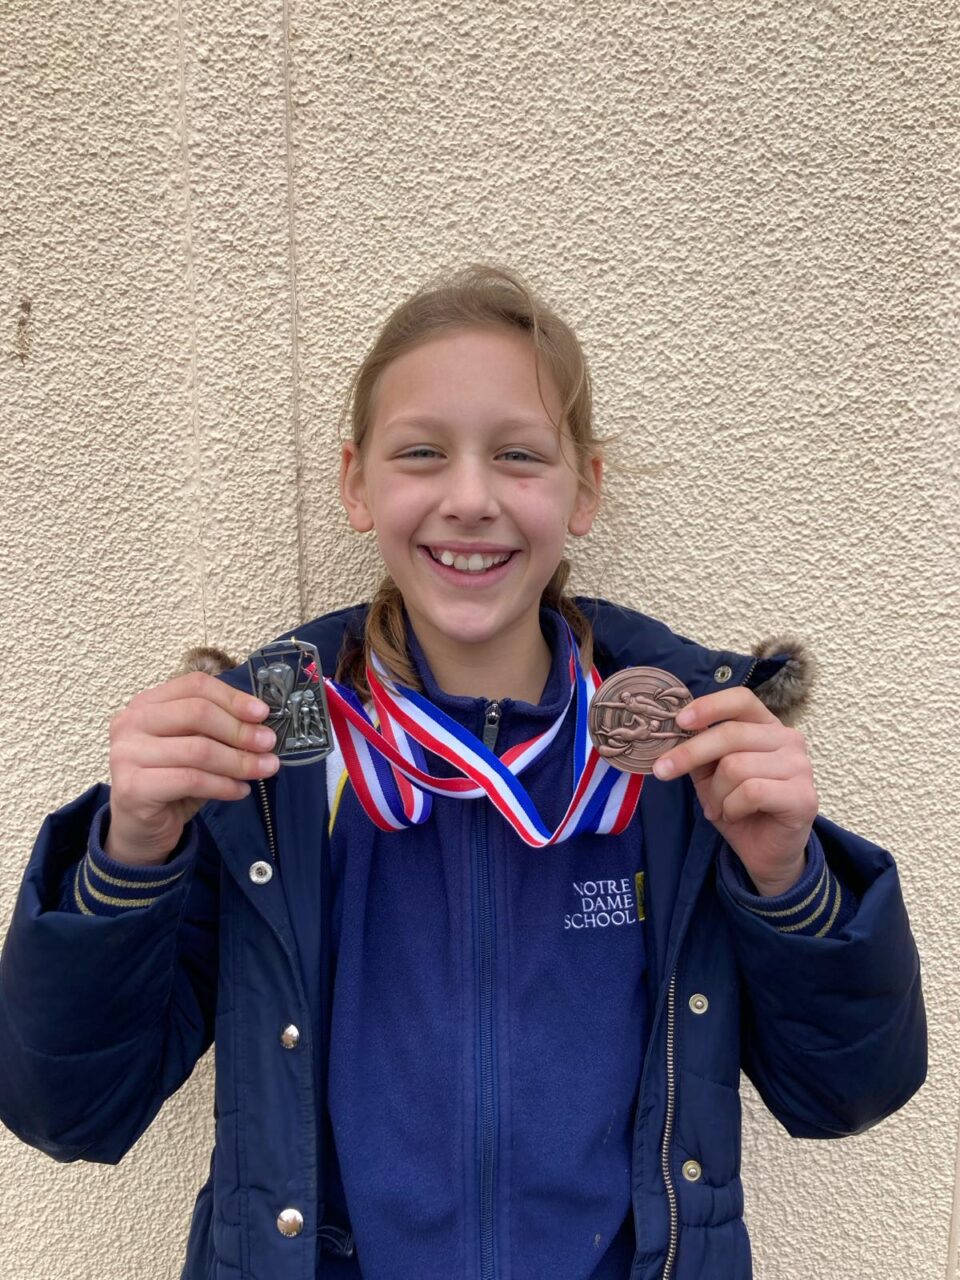 Emily L - Swimming Medals at Leatherhead Swim Club